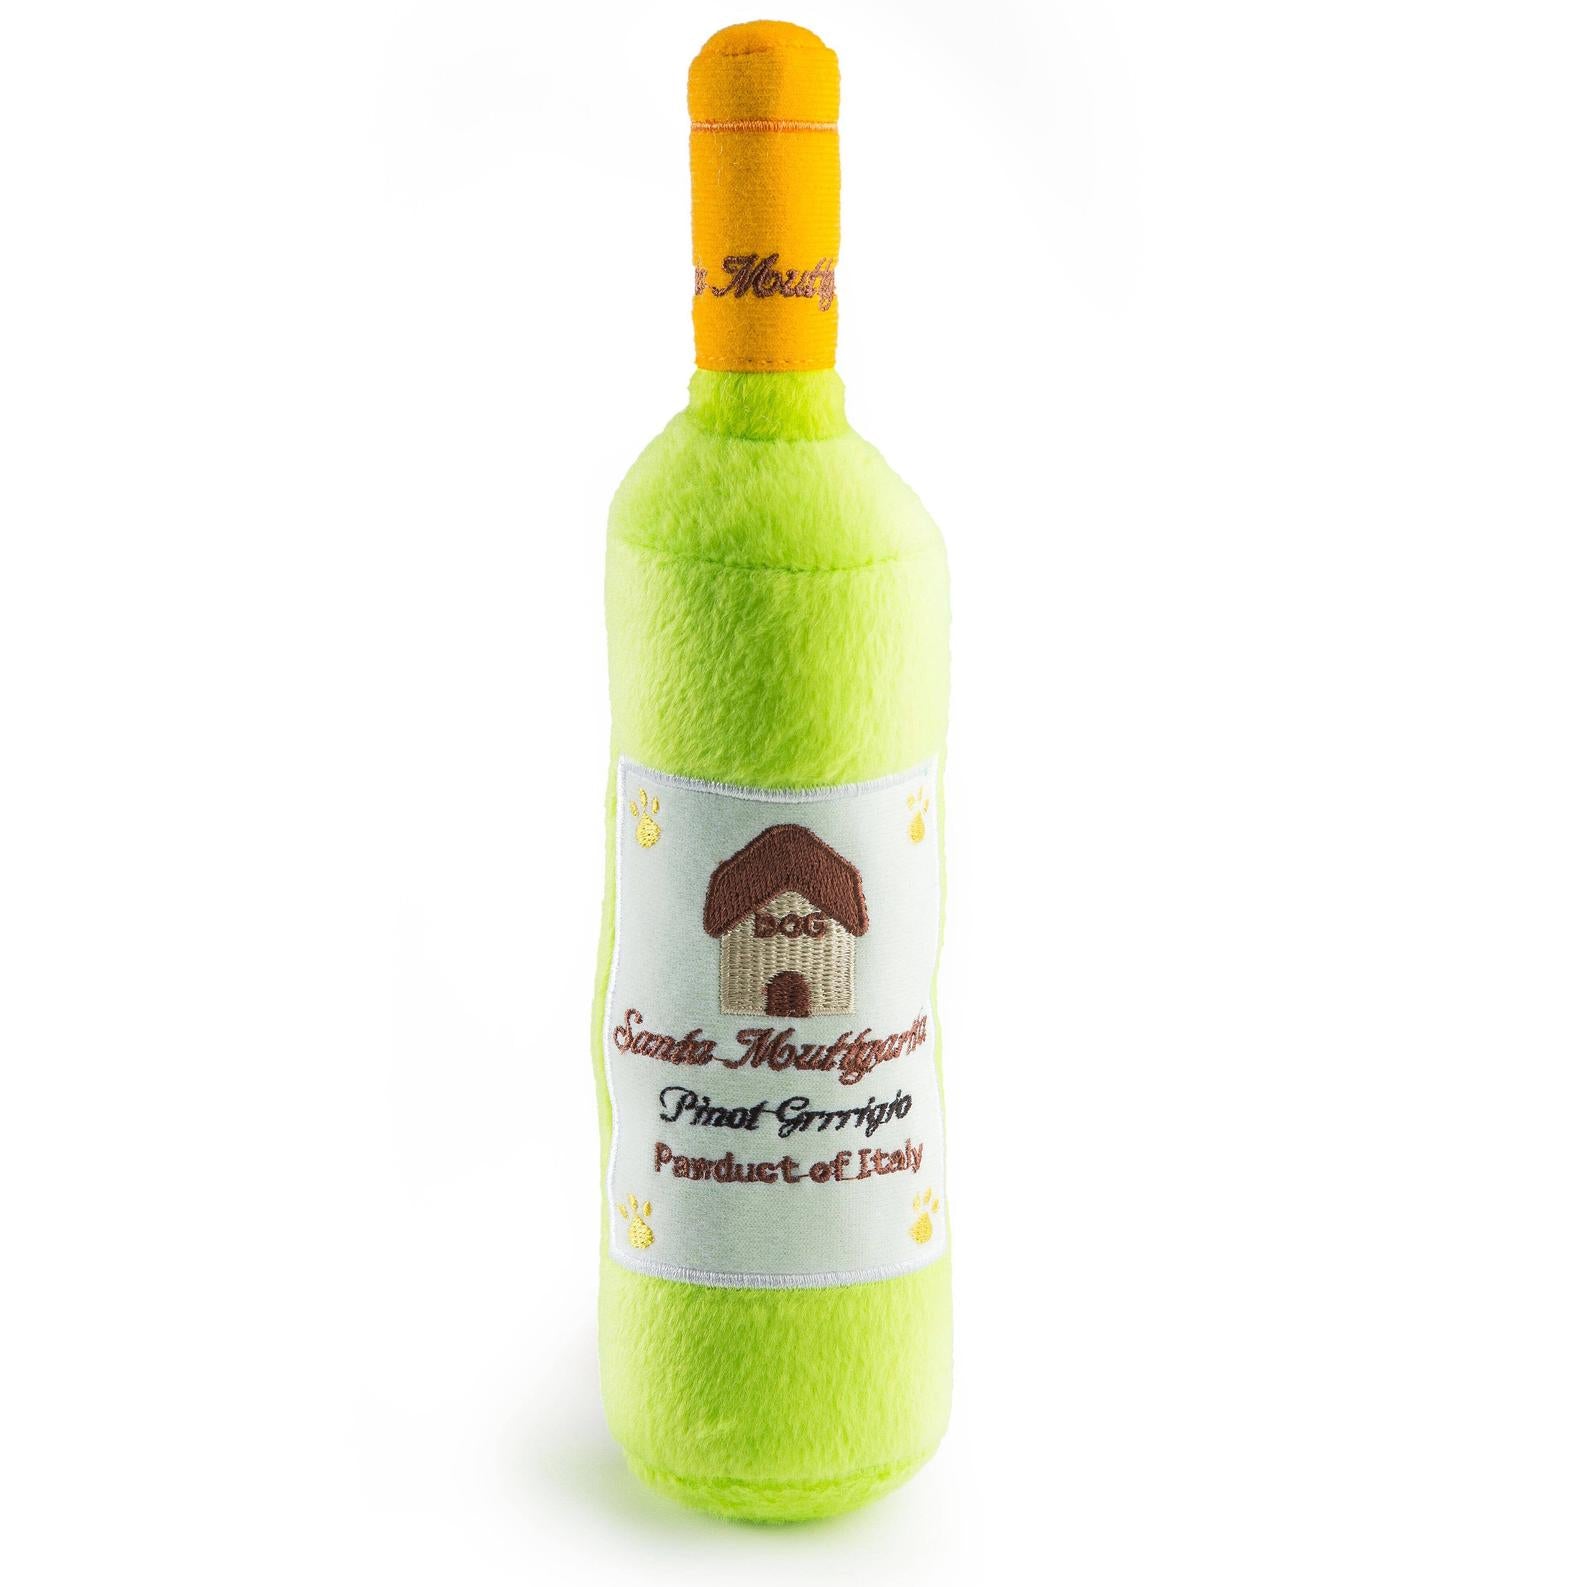 Santa Muttgarita Pinot Grrrigio Wine Toy